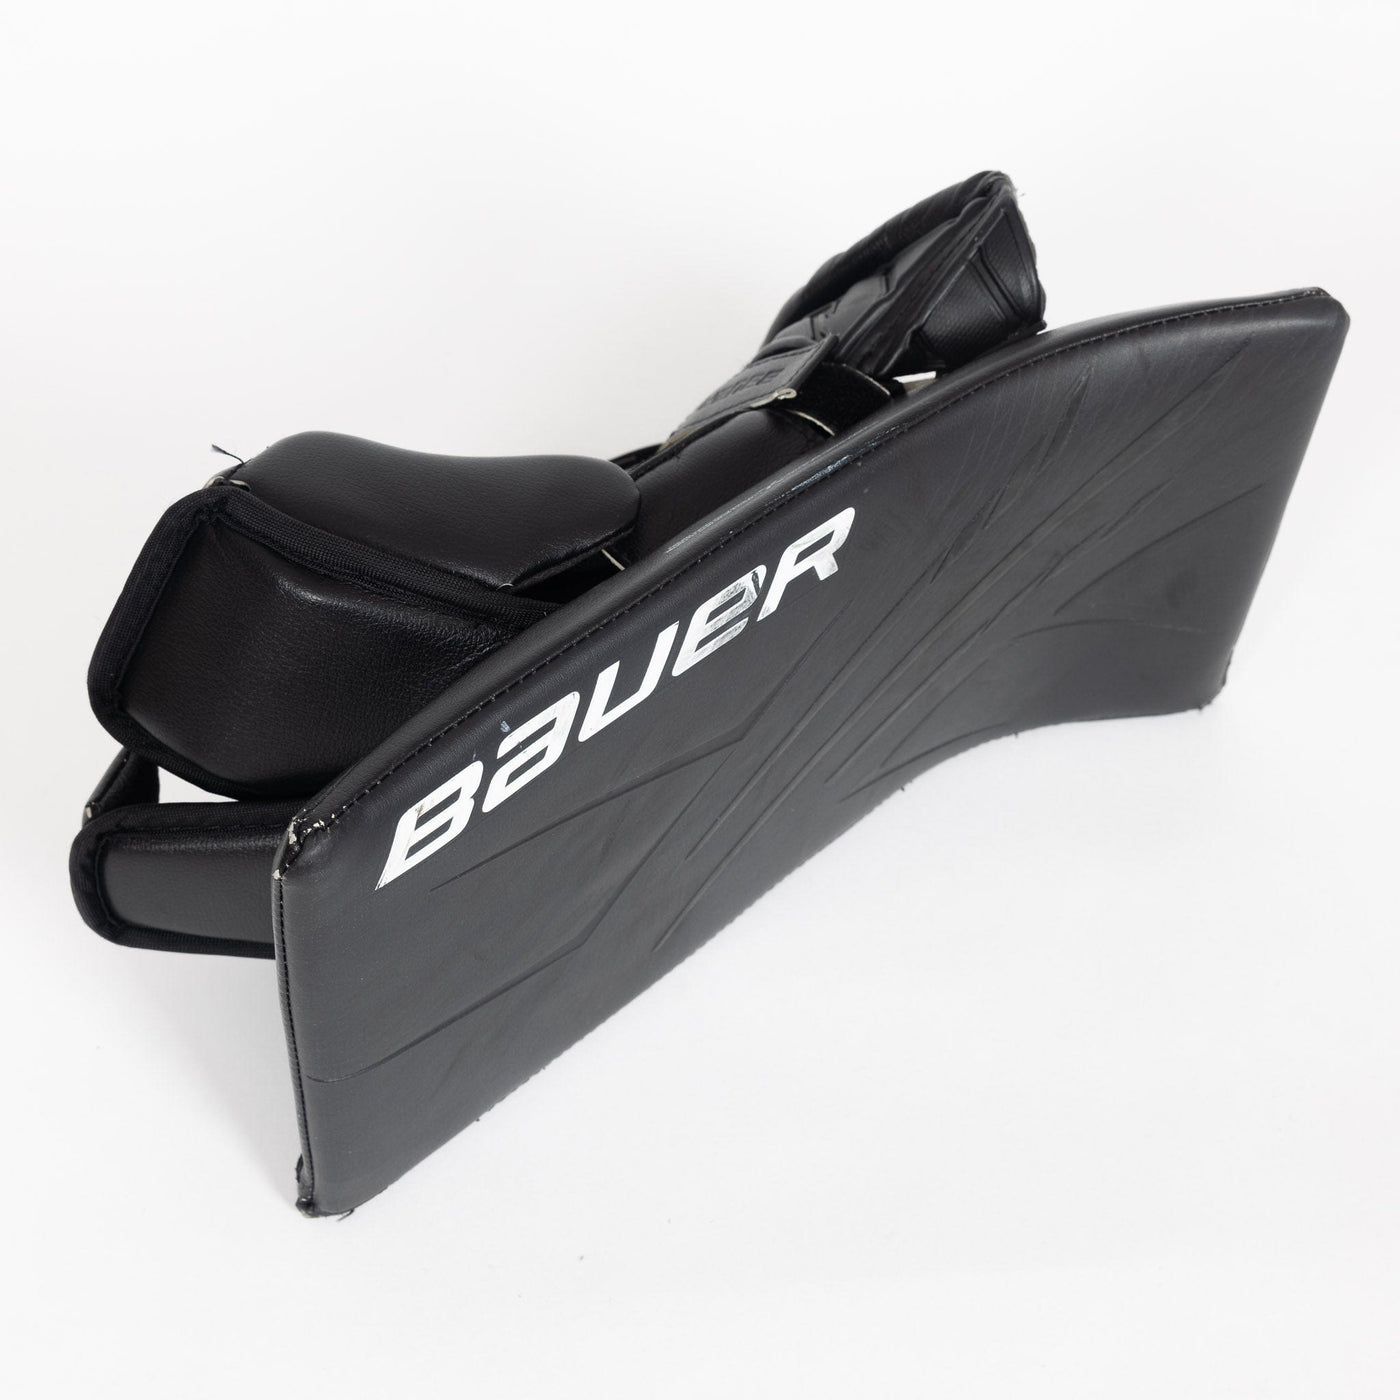 Bauer Vapor HyperLite Senior Goalie Glove Set - USED #2 - TheHockeyShop.com